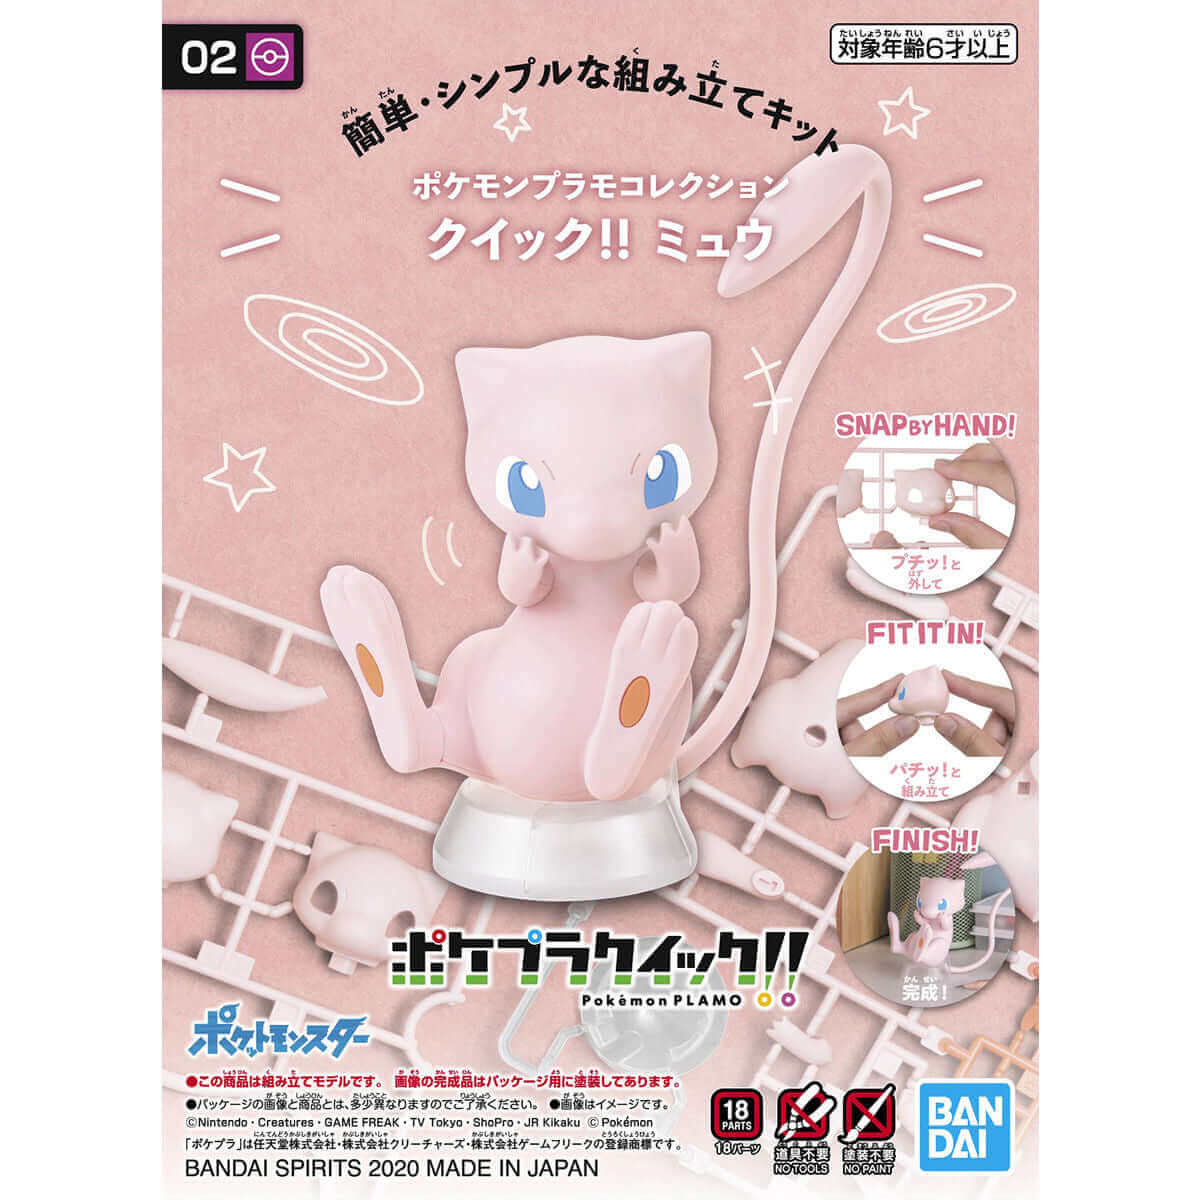 02 Mew Model kit - Pokémon Plamo Quick! Collection - konbinistop